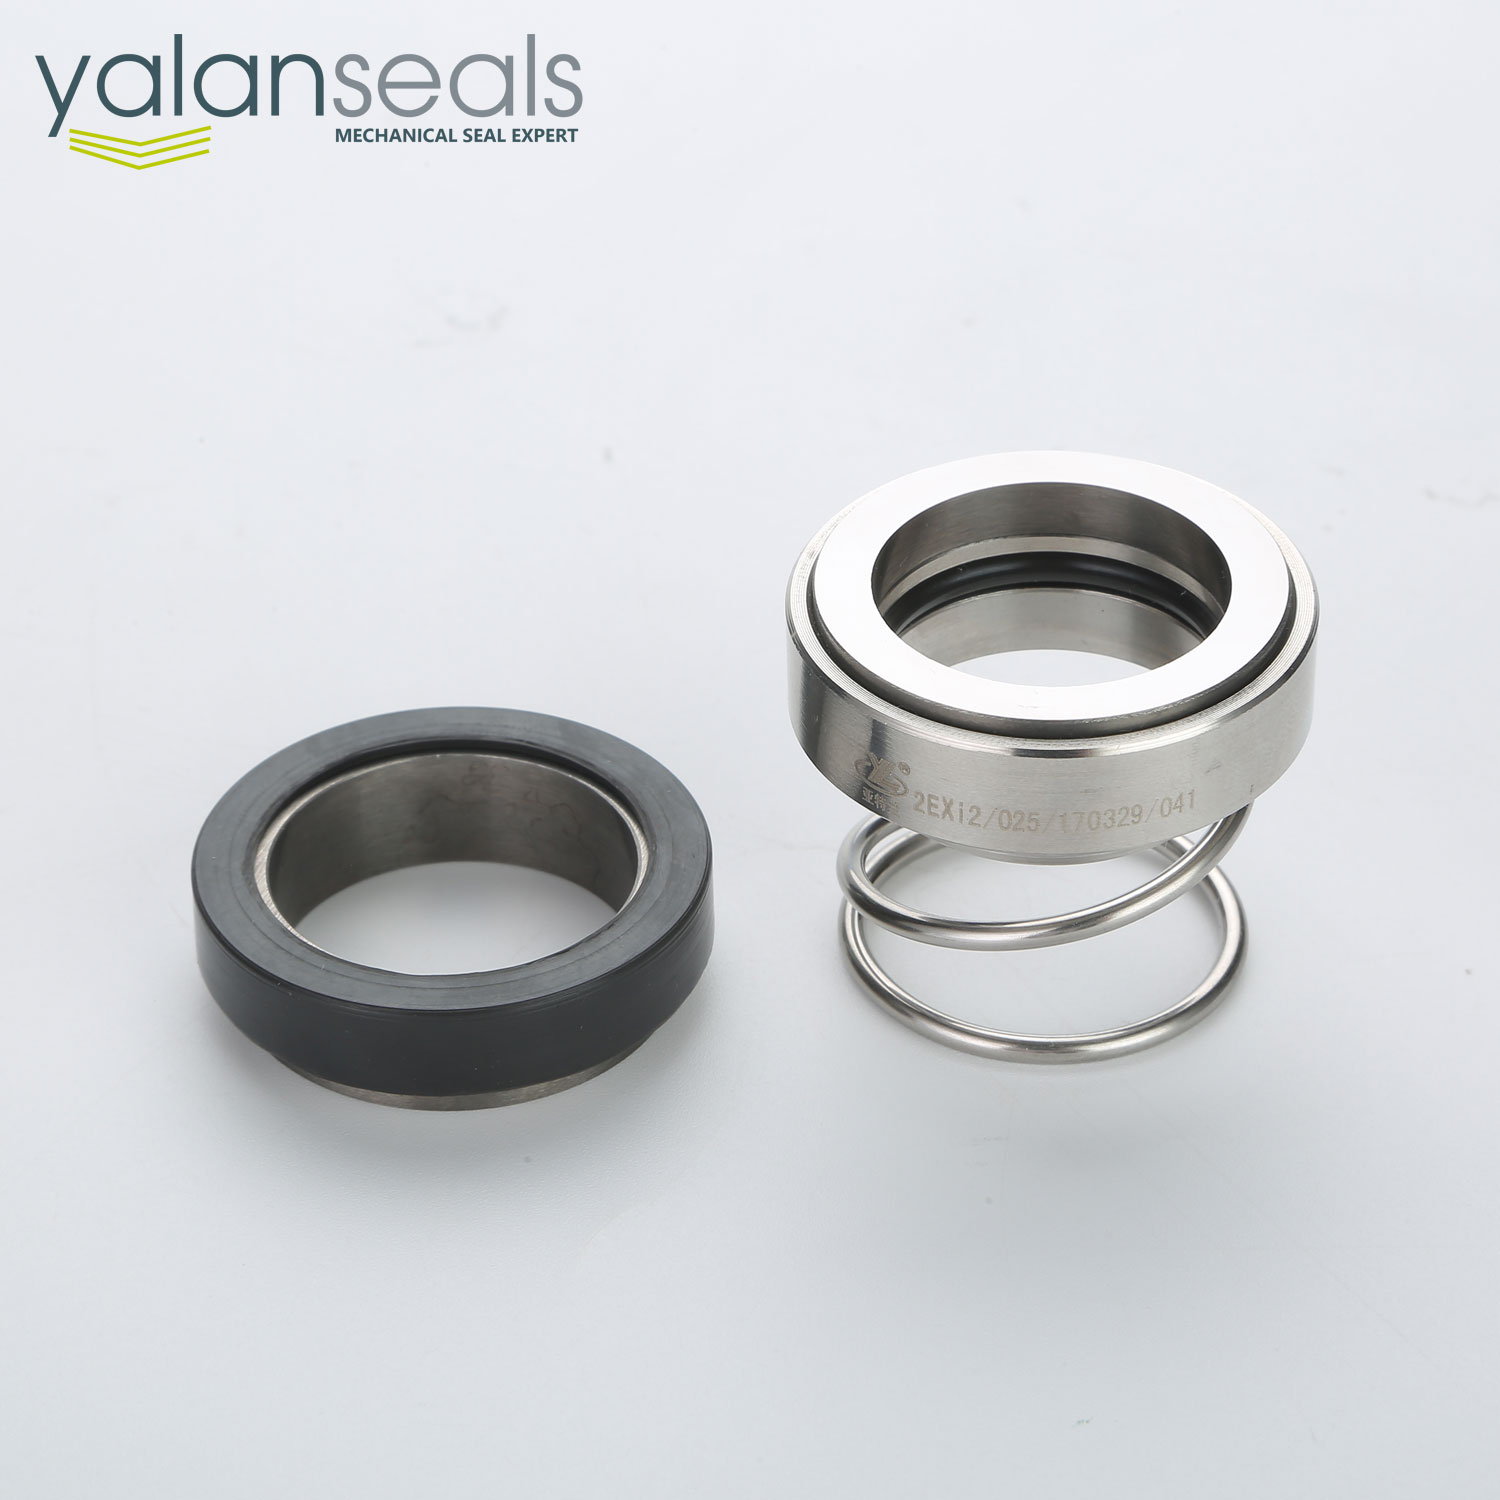 YALAN EX Single Spring Mechanical Seals for Vortex Pumps